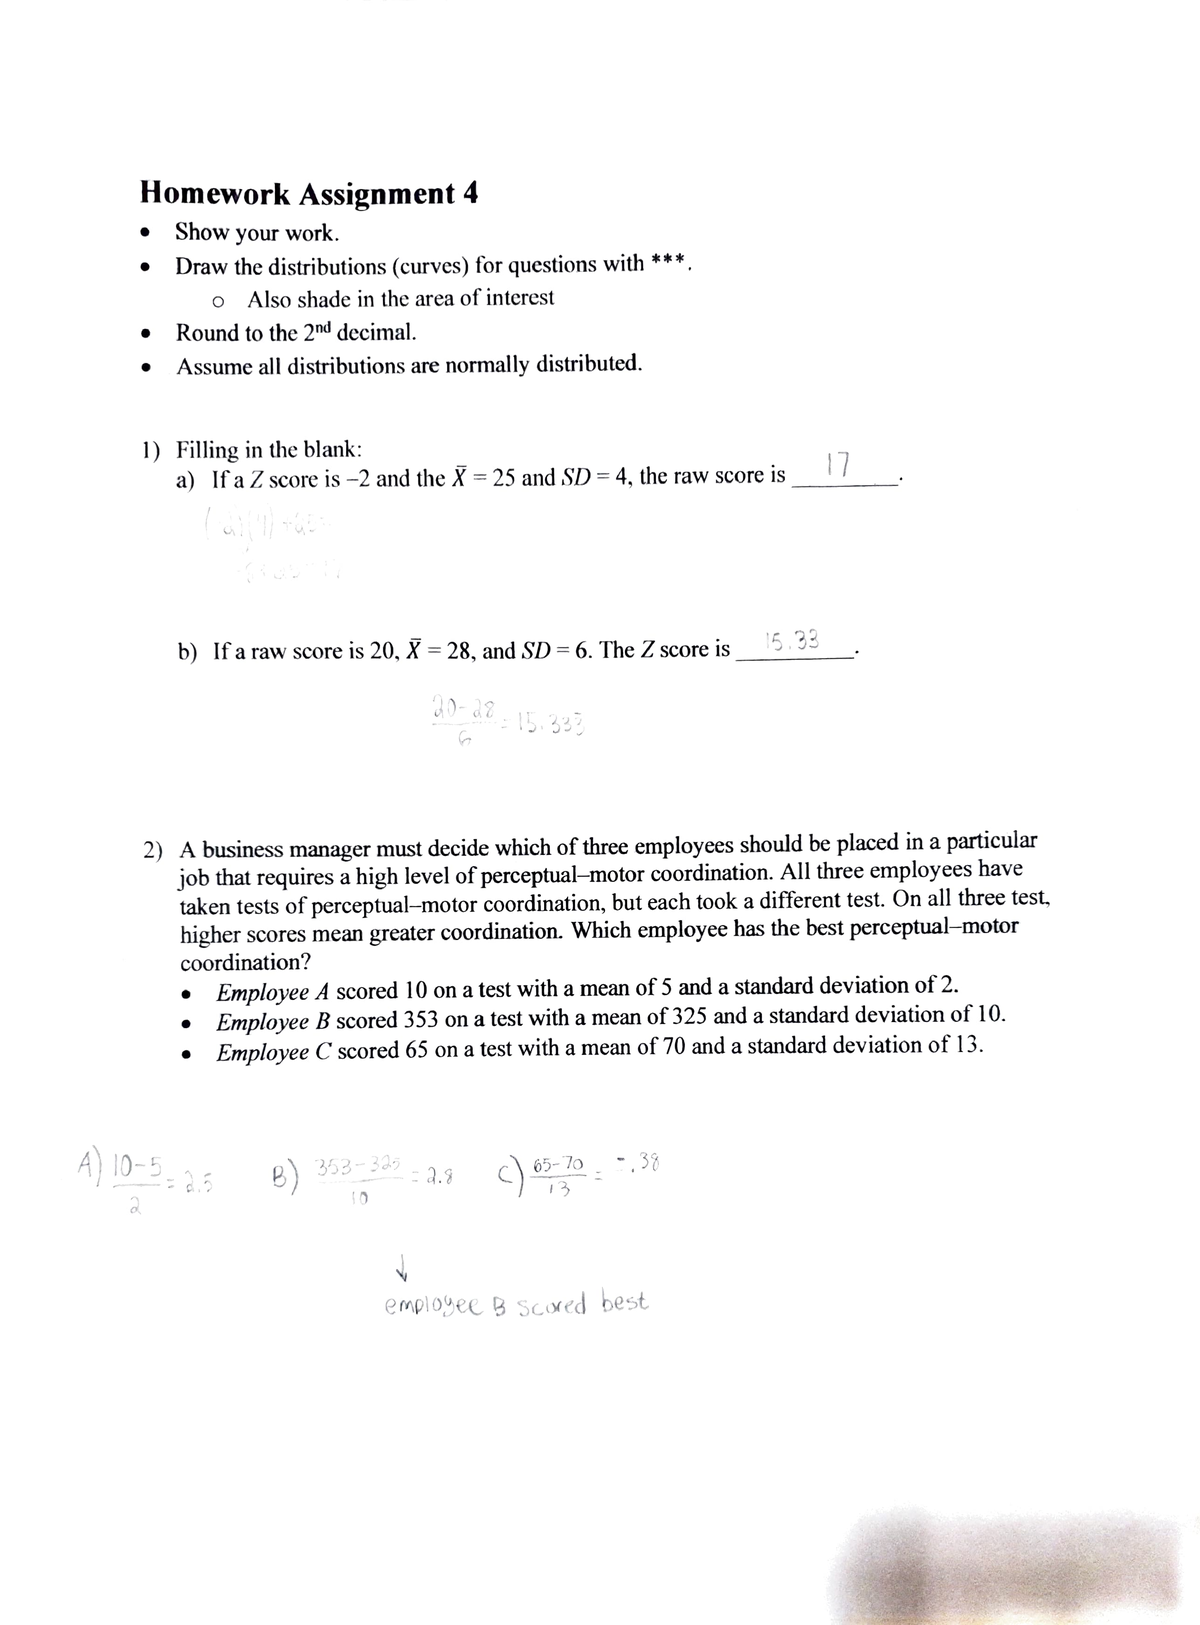 statistics homework 3.2